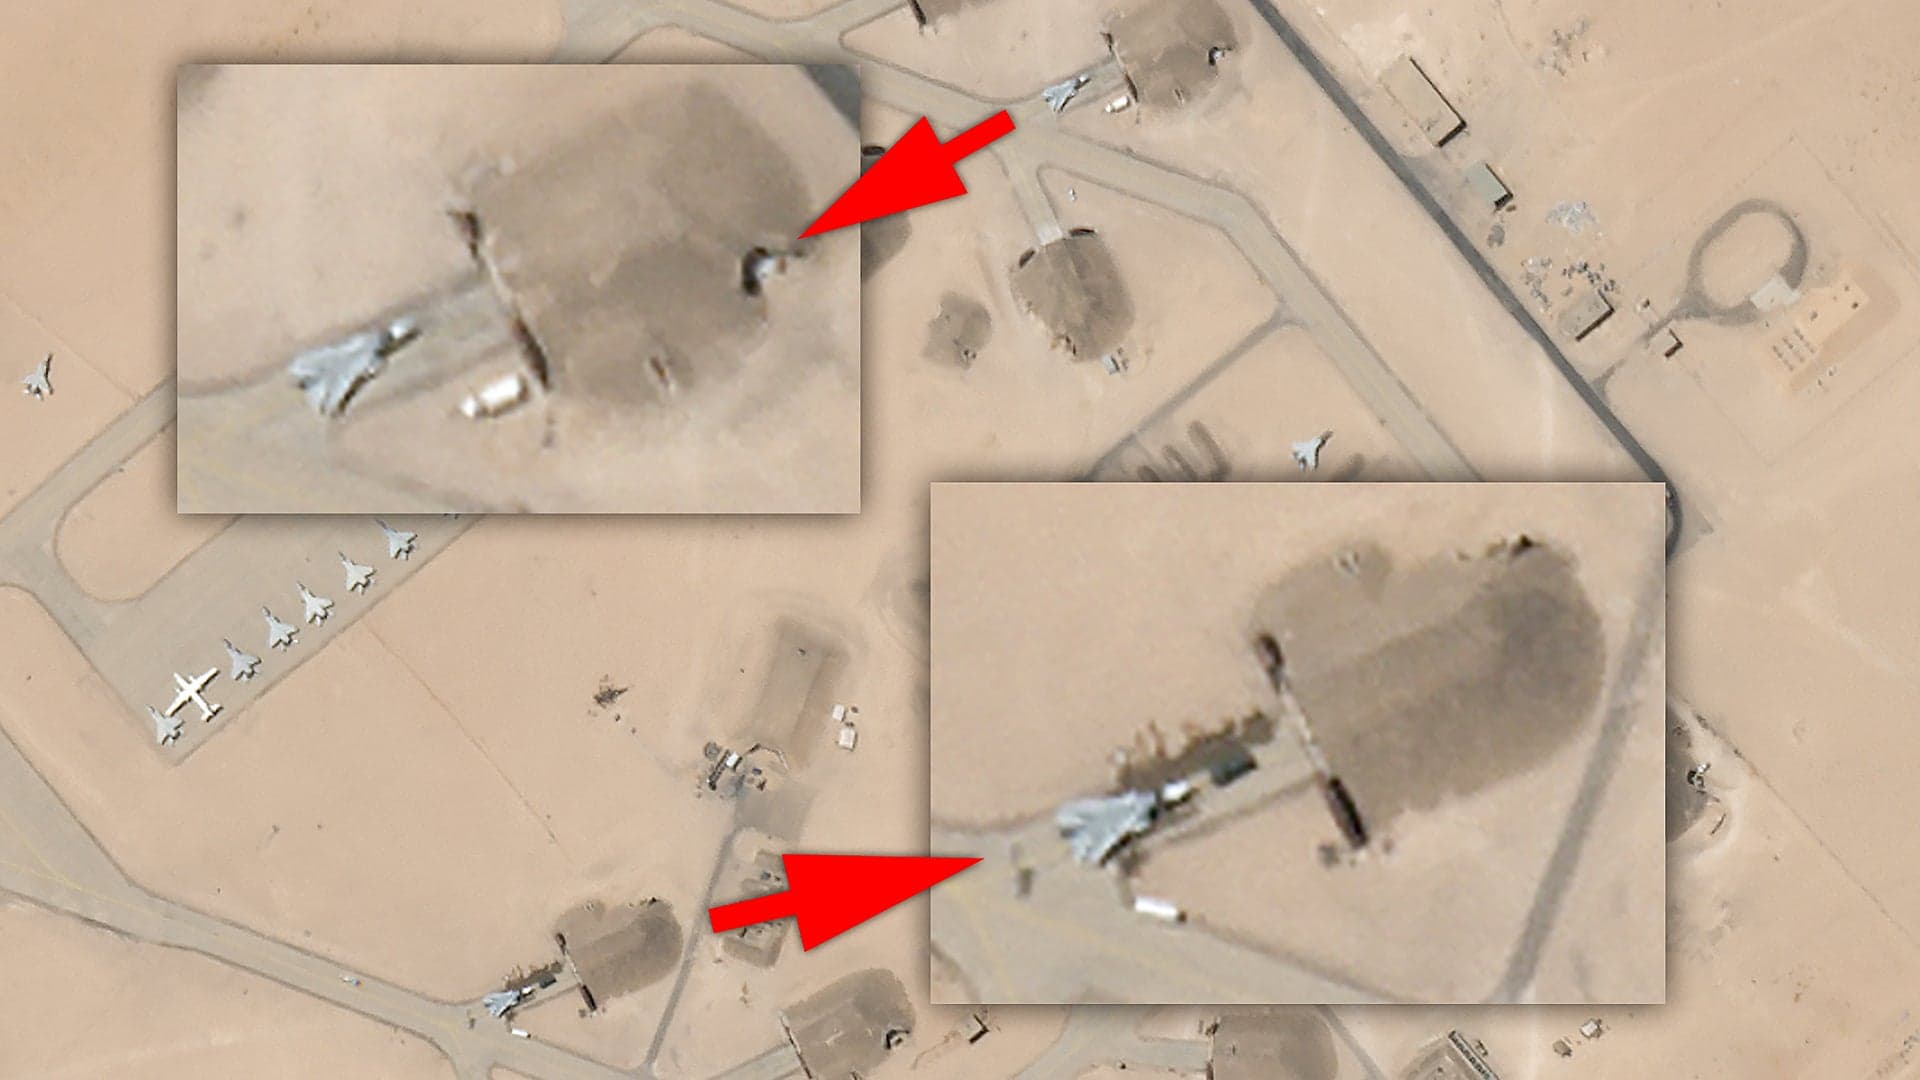 Two Su-24 Combat Jets Seen In Satellite Image Of Libyan Air Base As Air War Intensifies